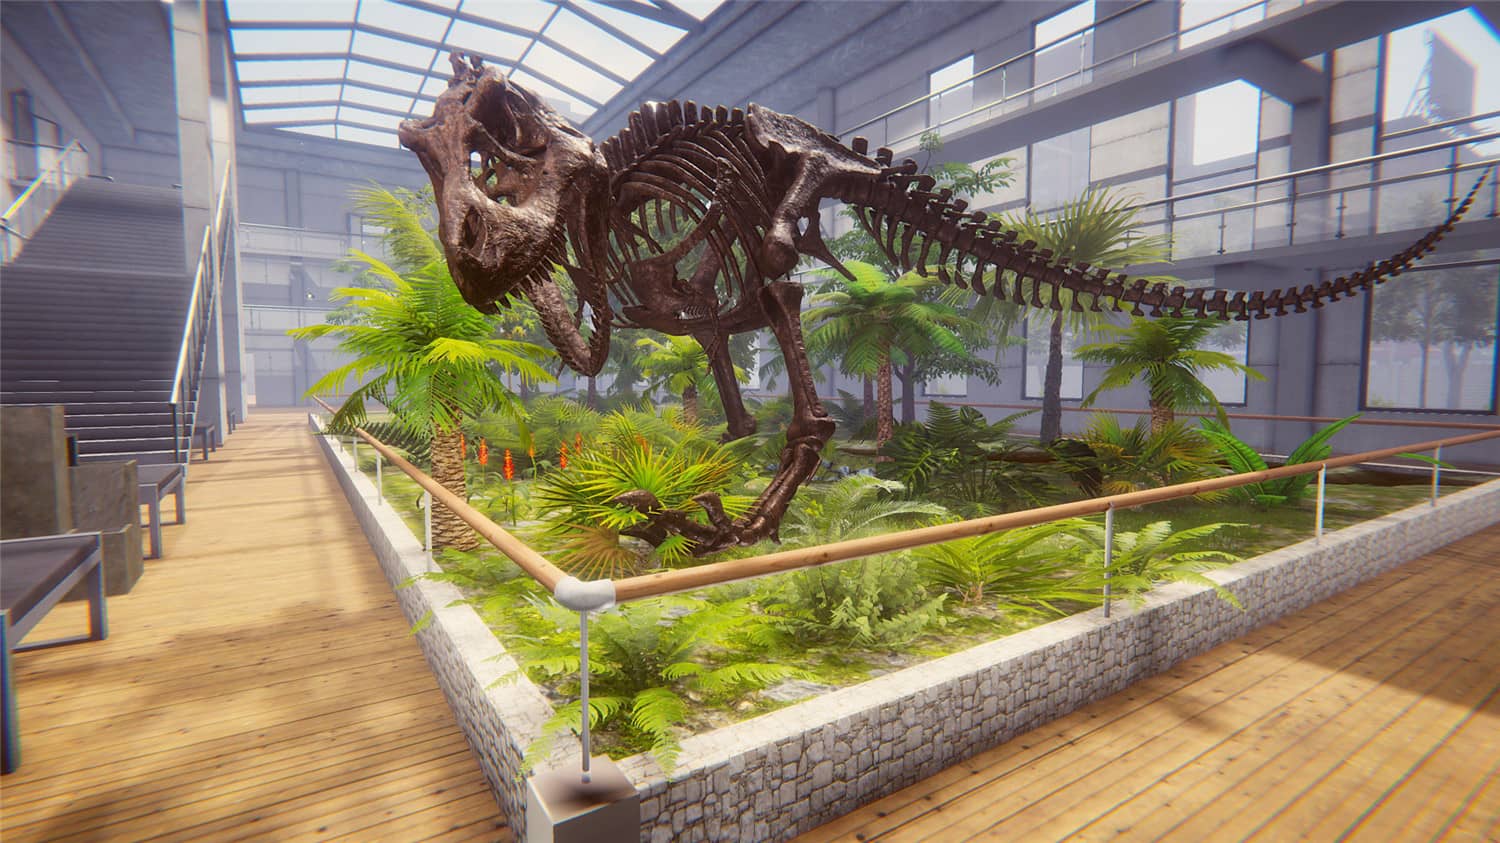 恐龙化石猎人 古生物学家模拟器/Dinosaur Fossil Hunter